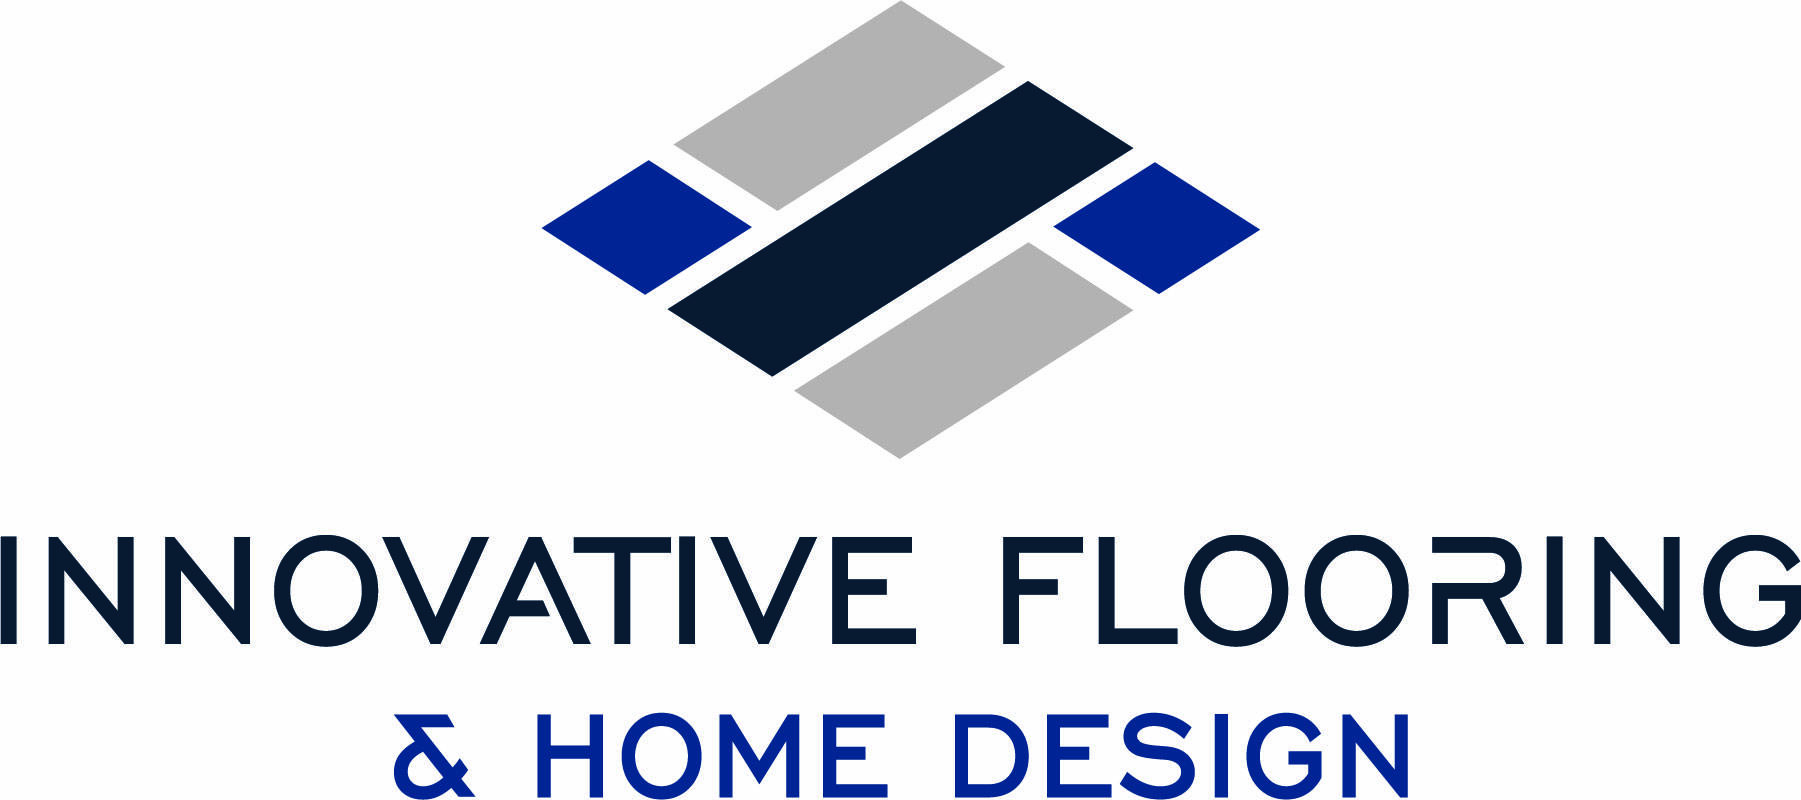 Innovative Flooring & Home Design